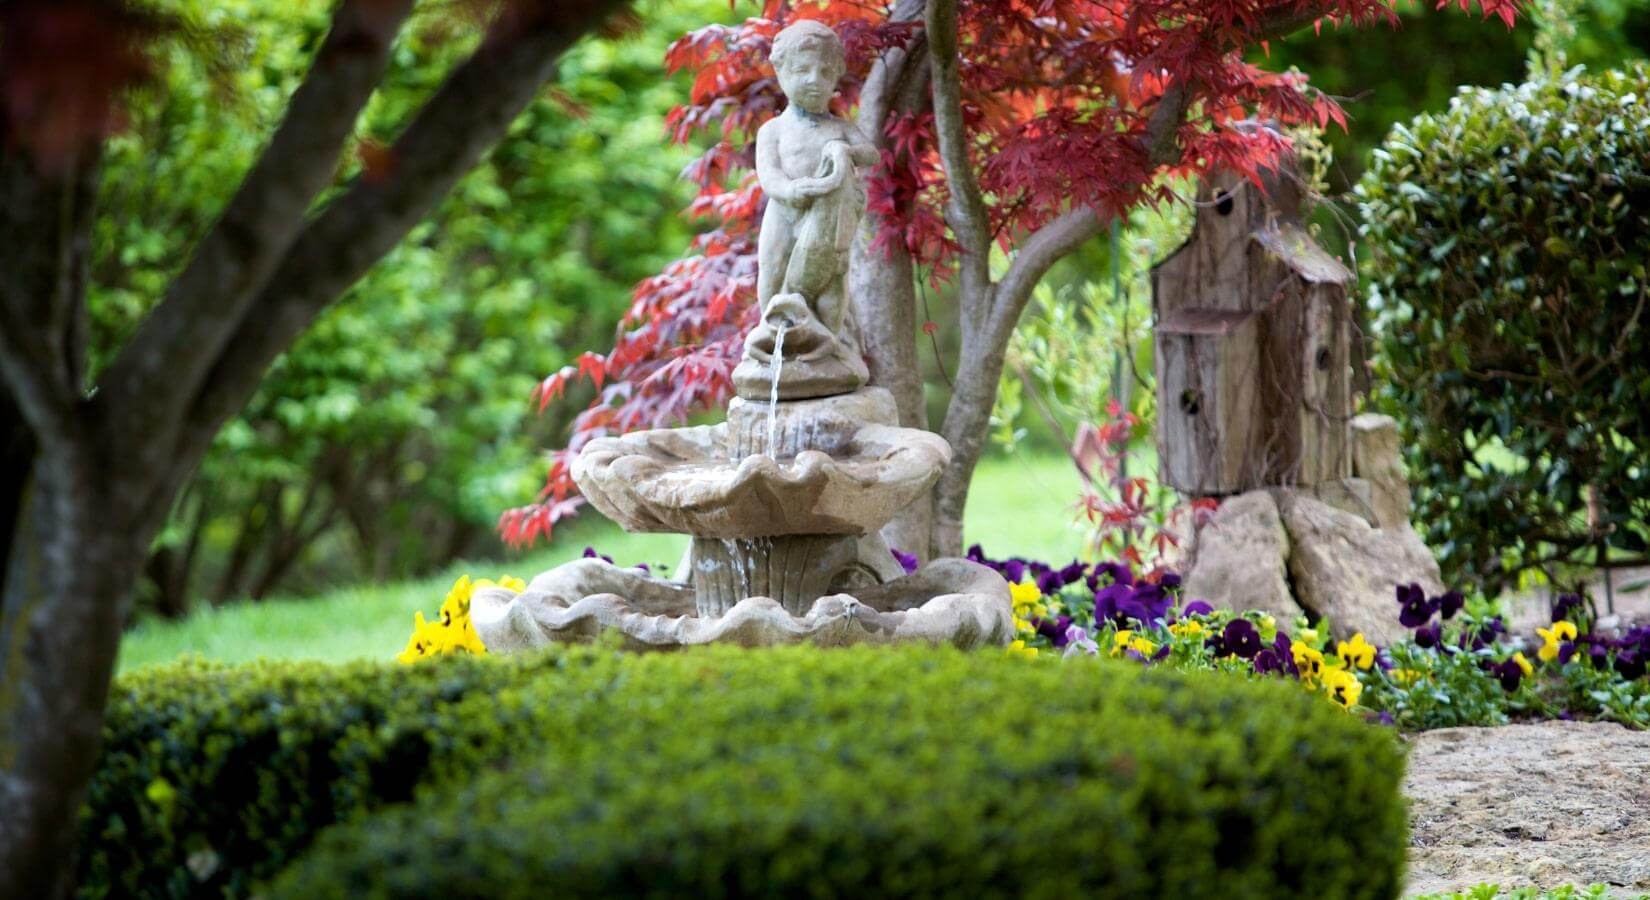 6 Ways Garden Fountains Improve Wellbeing - Fountainful